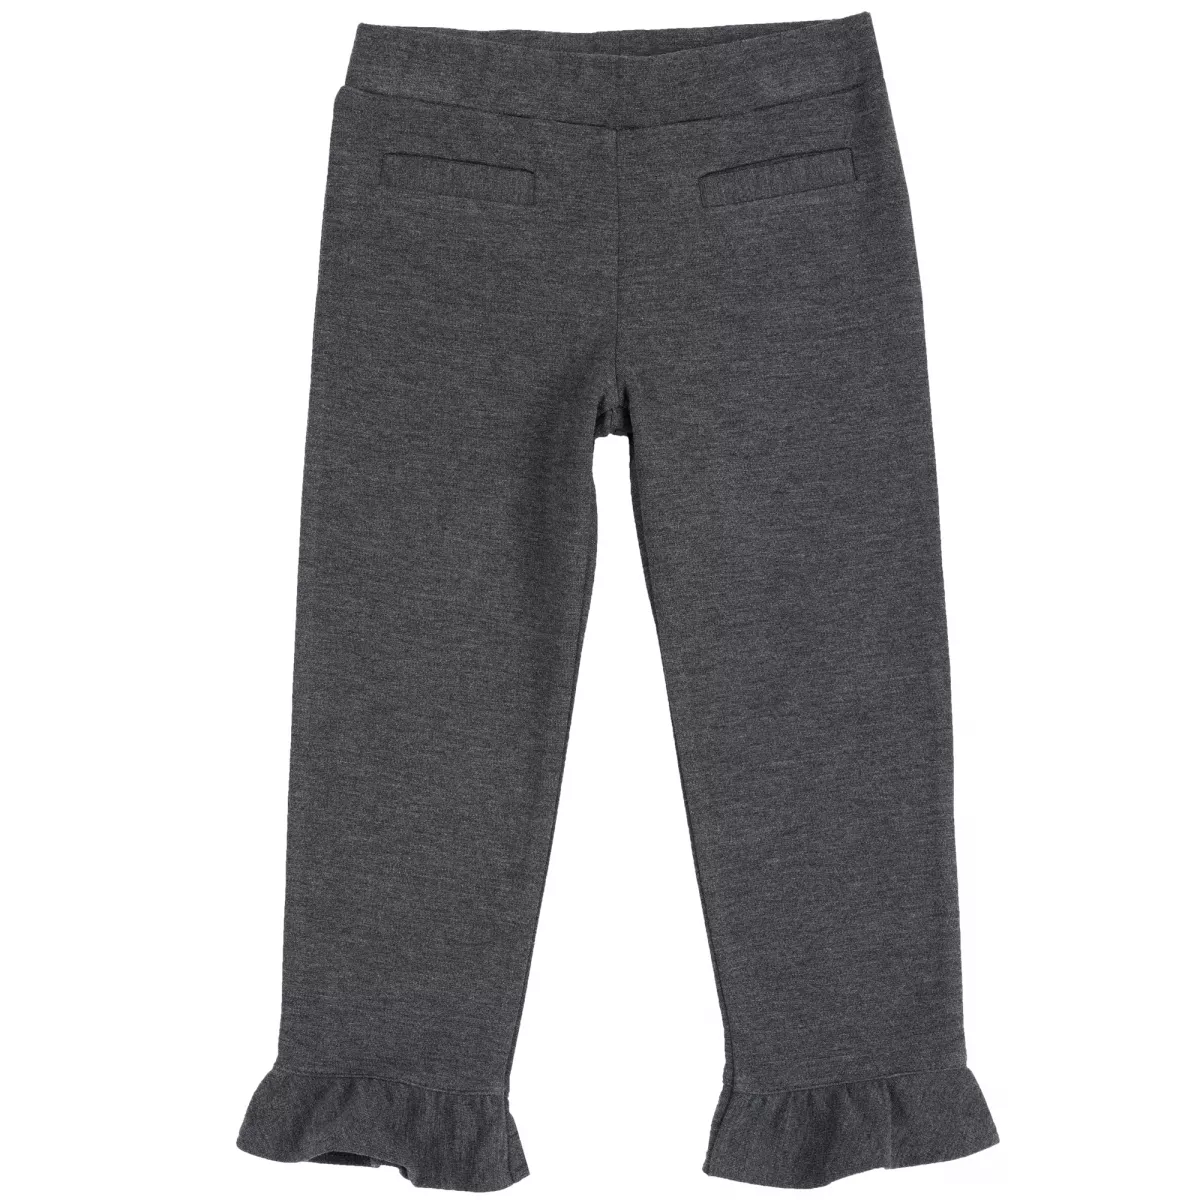 Pantalon copii Chicco, gri inchis, 116